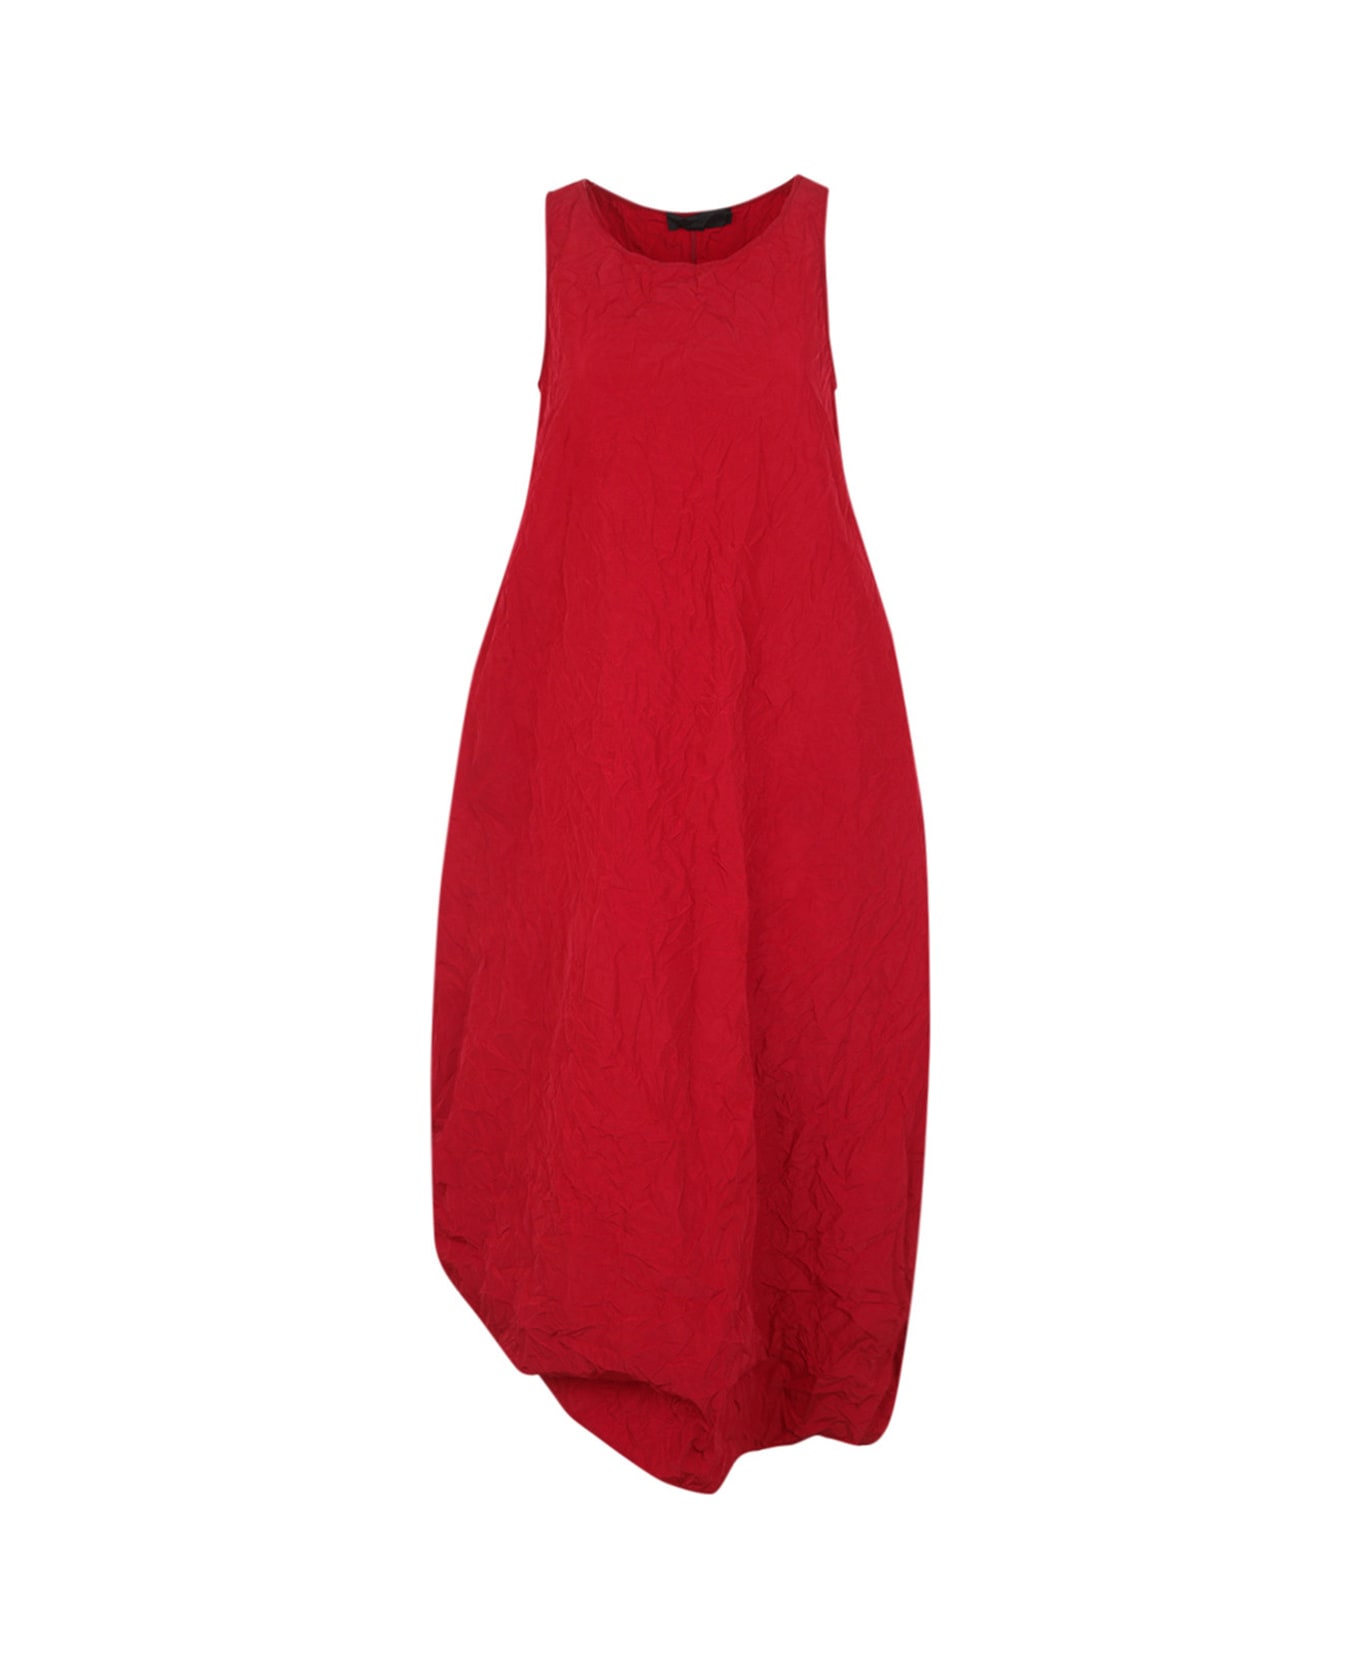 Maria Calderara Marionetta Crinkled Opaque Taffeta Long Dress - Ruby Red